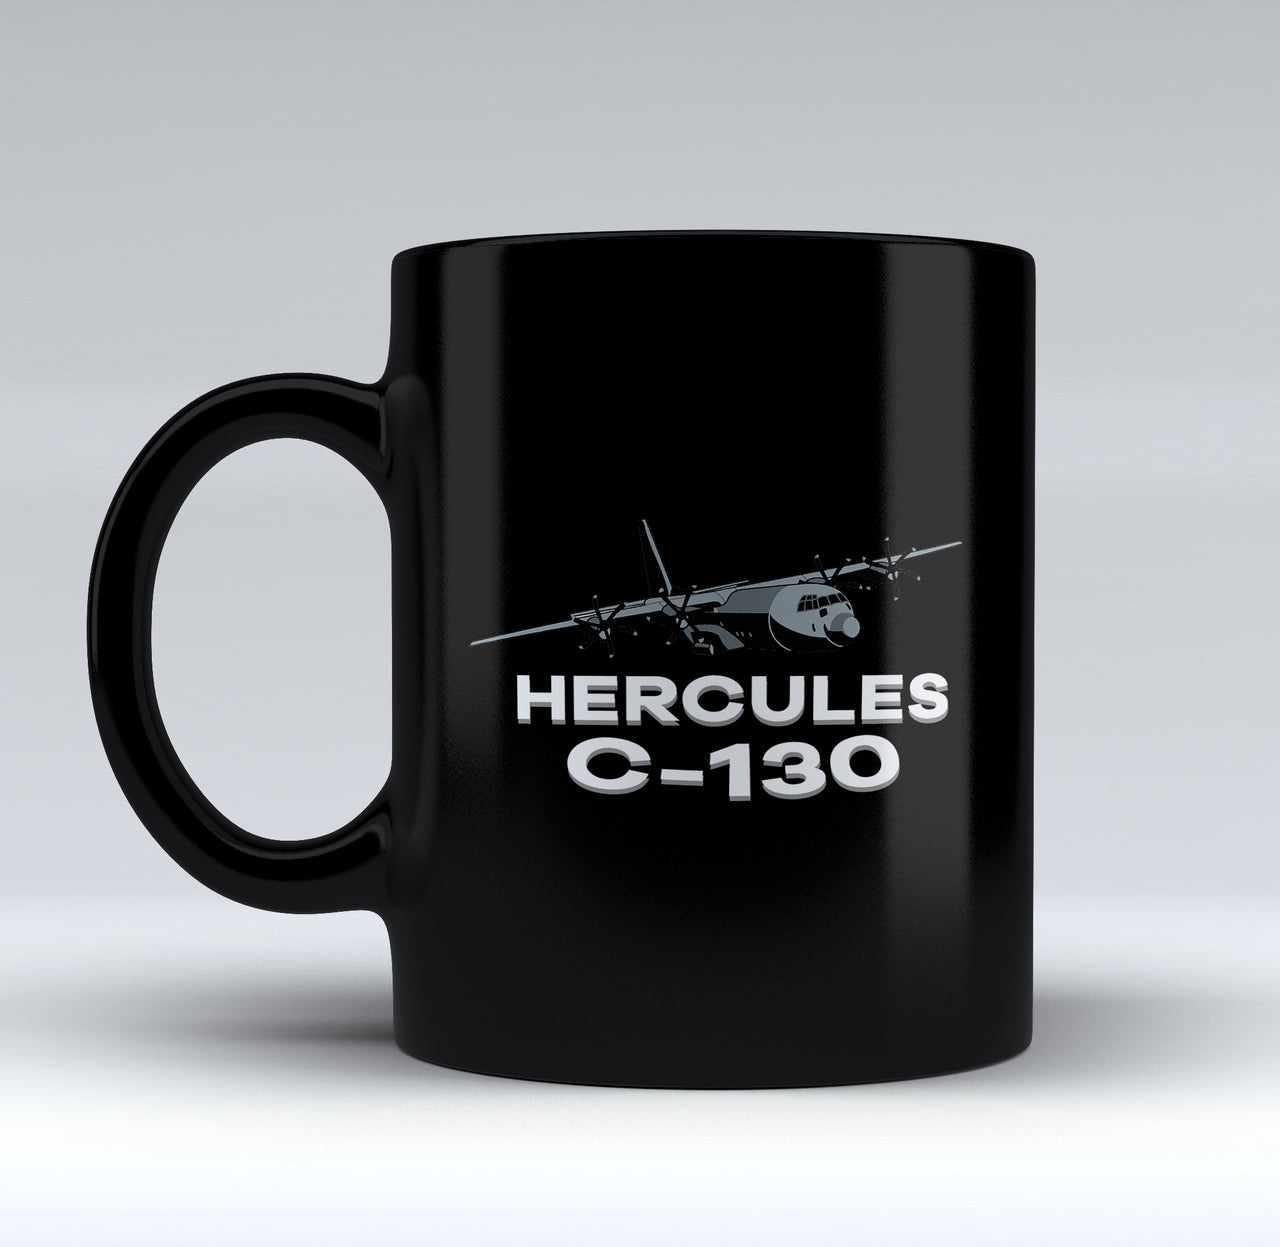 The Hercules C130 Designed Black Mugs